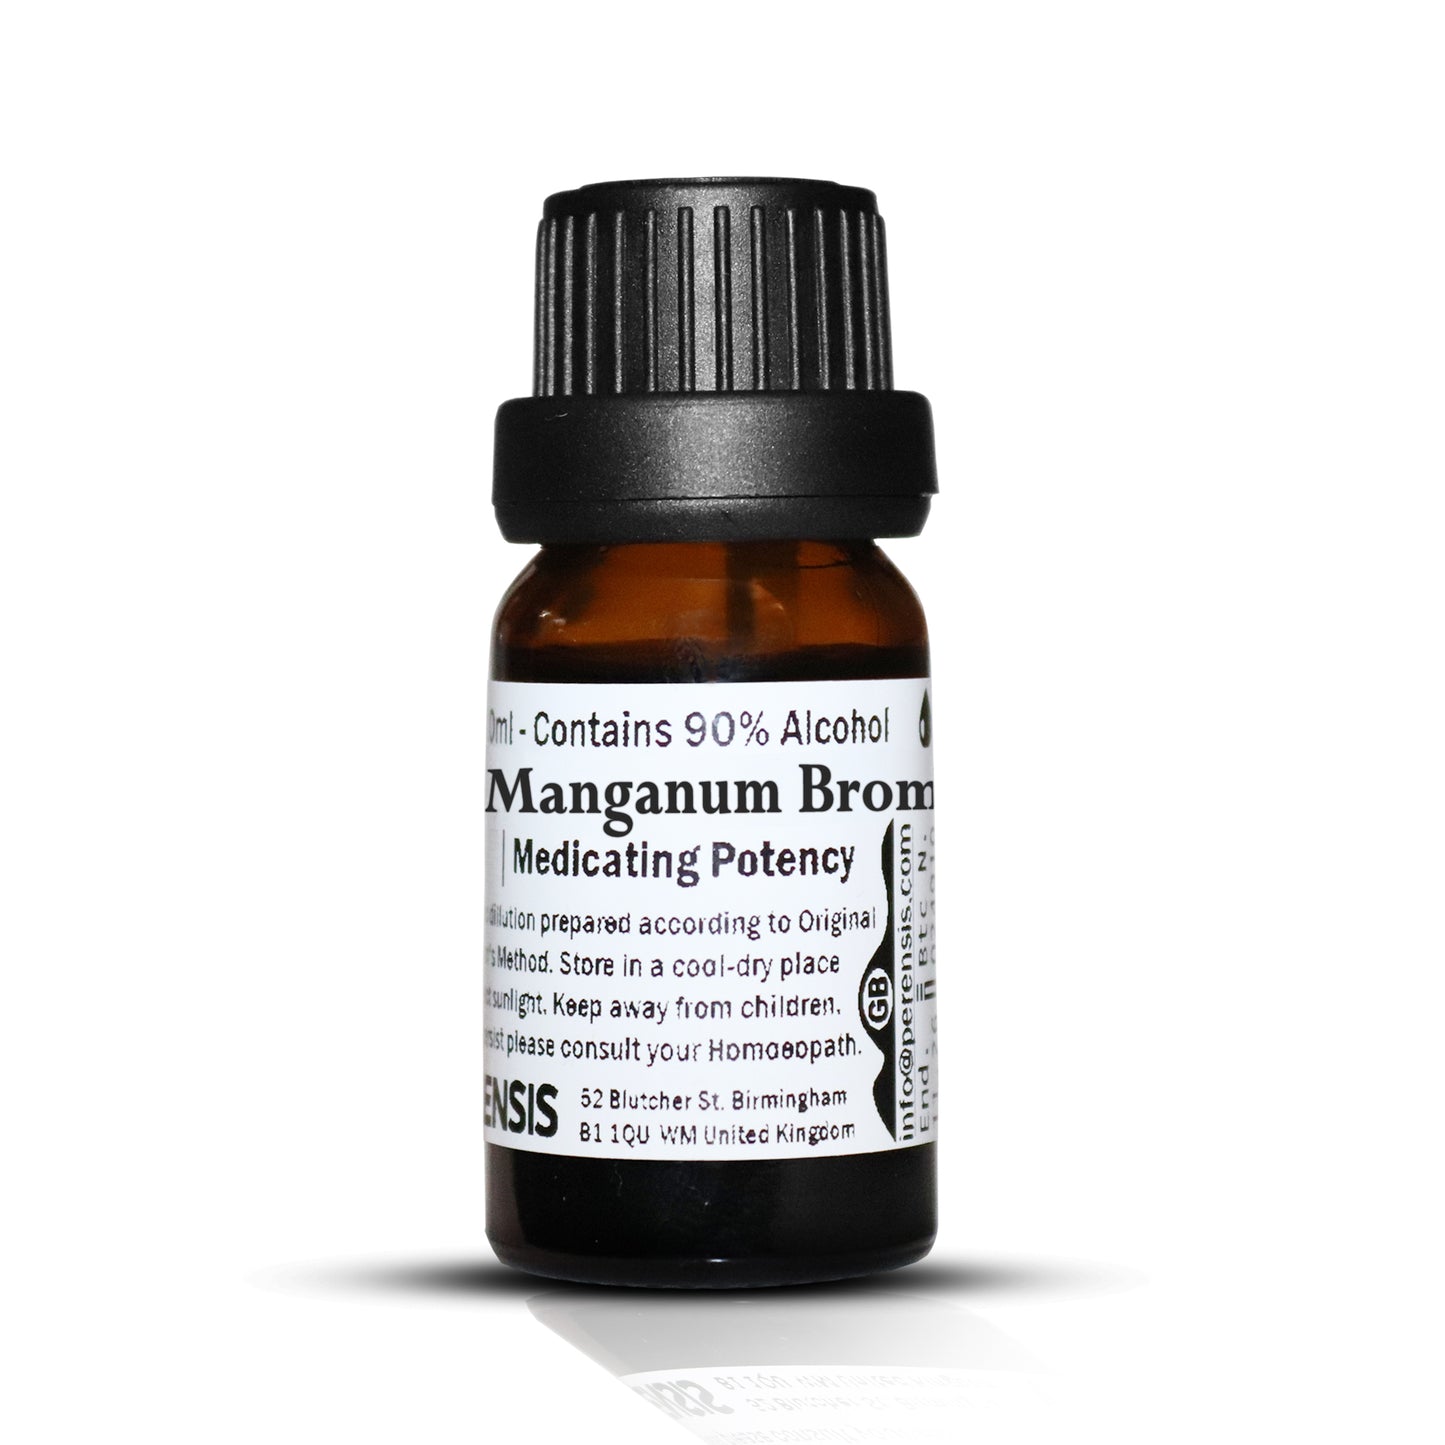 Manganum Brom